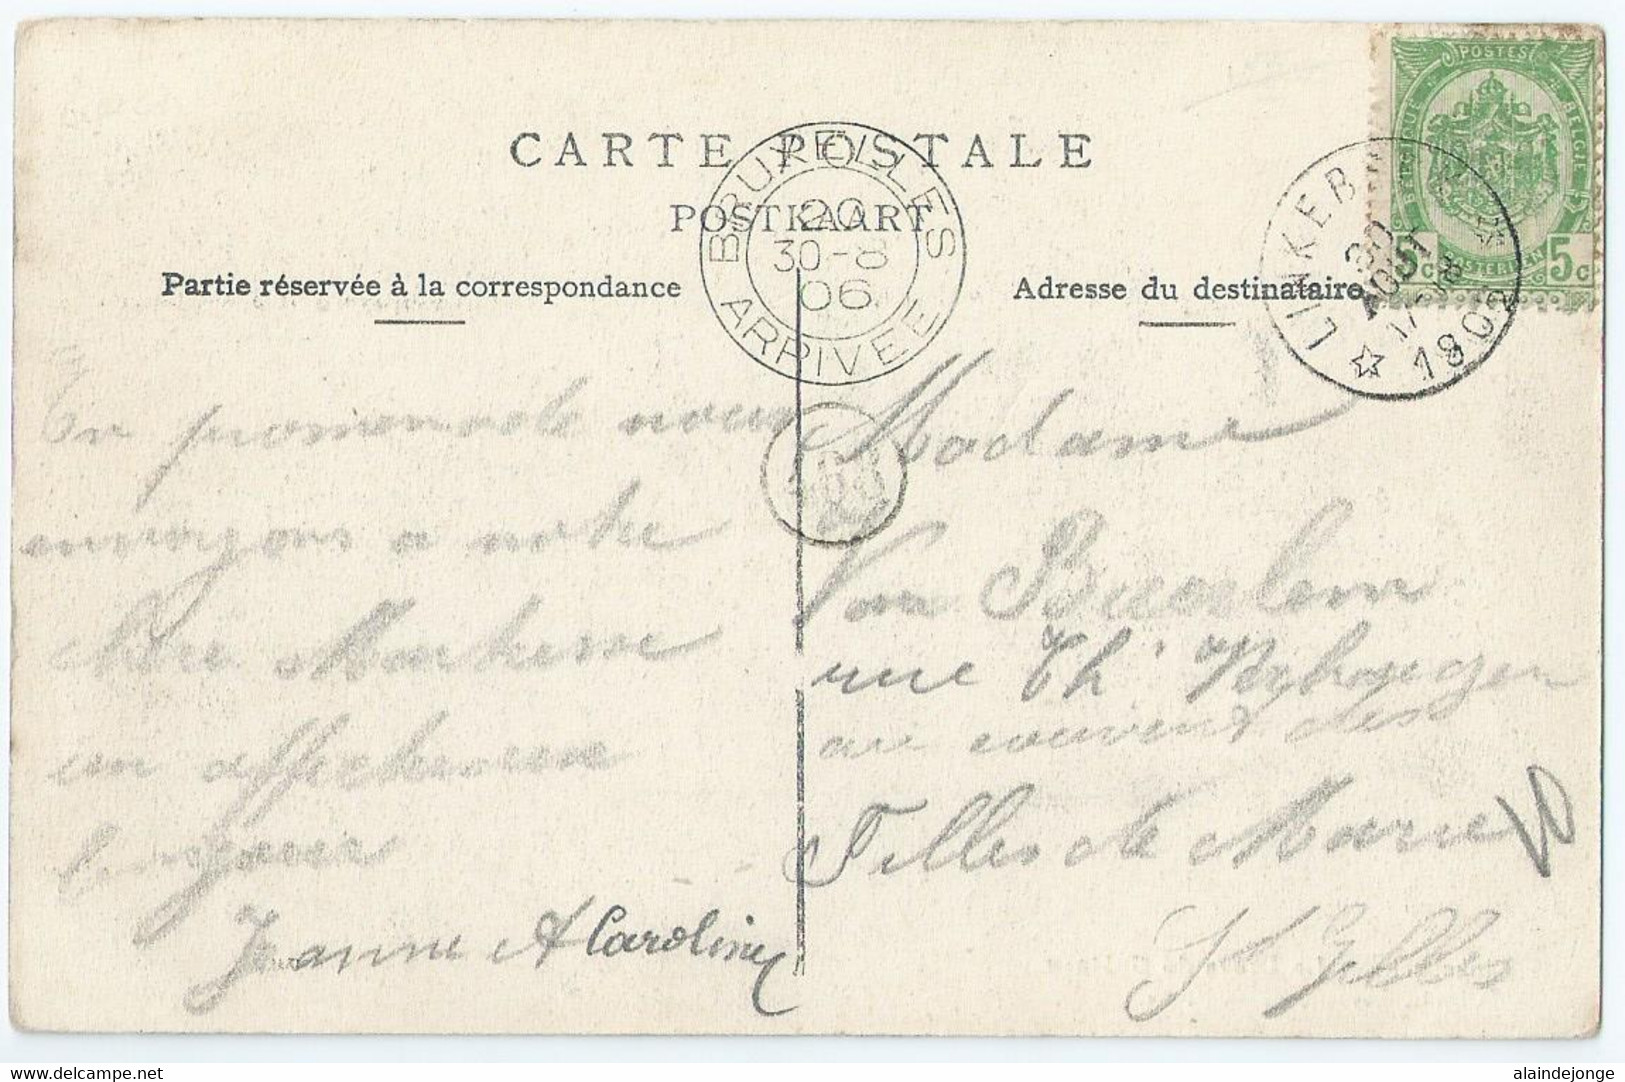 Linkebeek - La Drève Du Château - L. Lagaert N° 29 - 1906 - Linkebeek